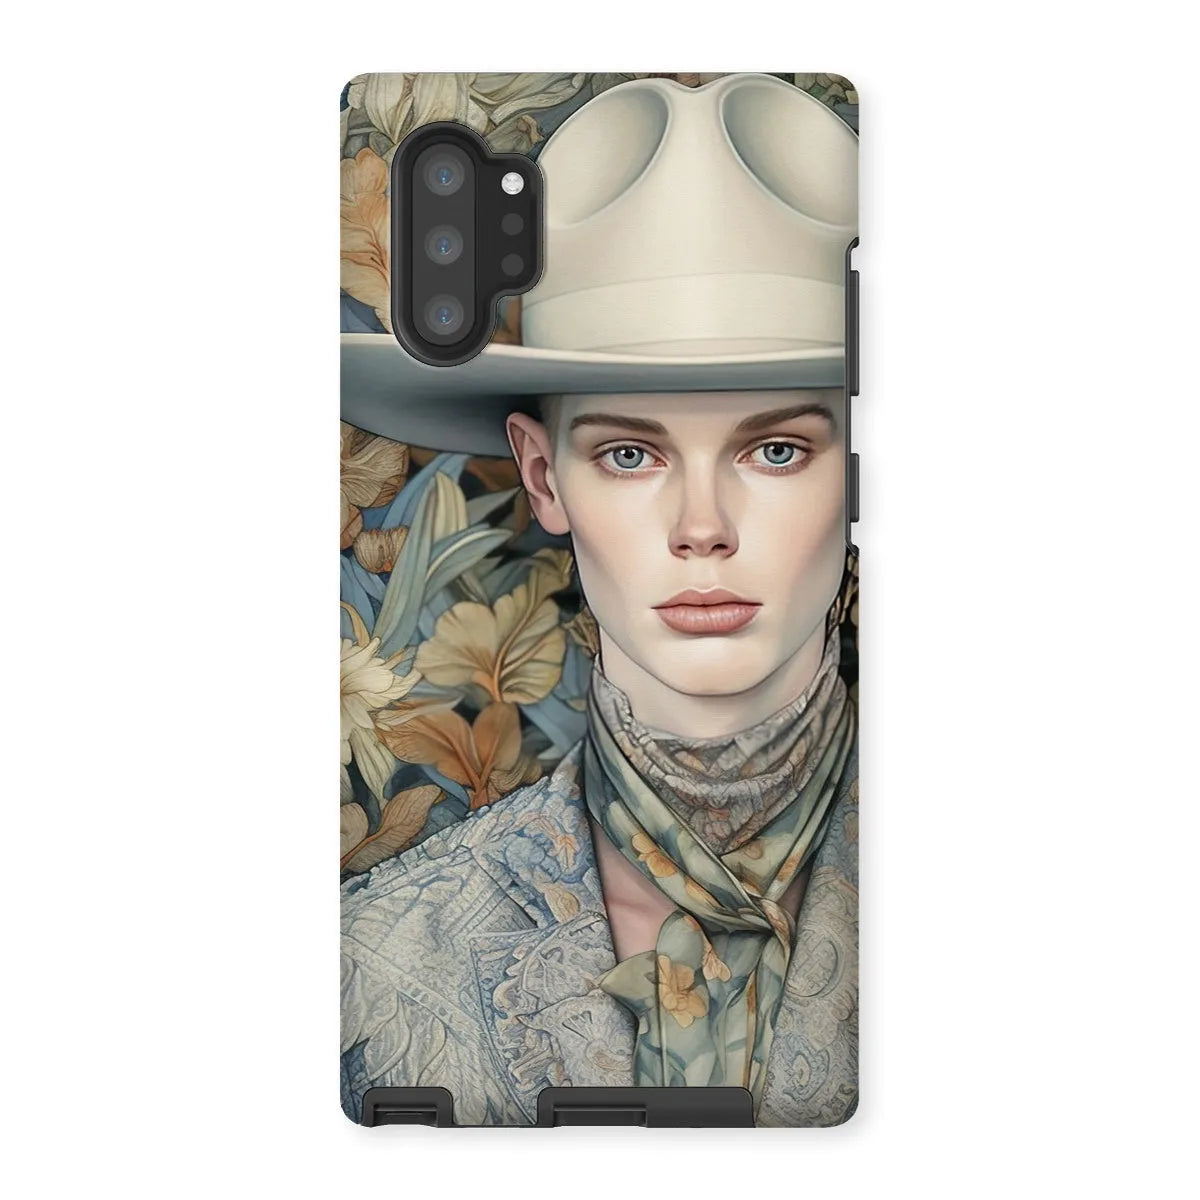 Jasper - Dandy Twink Cowboy Aesthetic Art Phone Case - Samsung Galaxy Note 10p / Matte - Mobile Phone Cases - Aesthetic